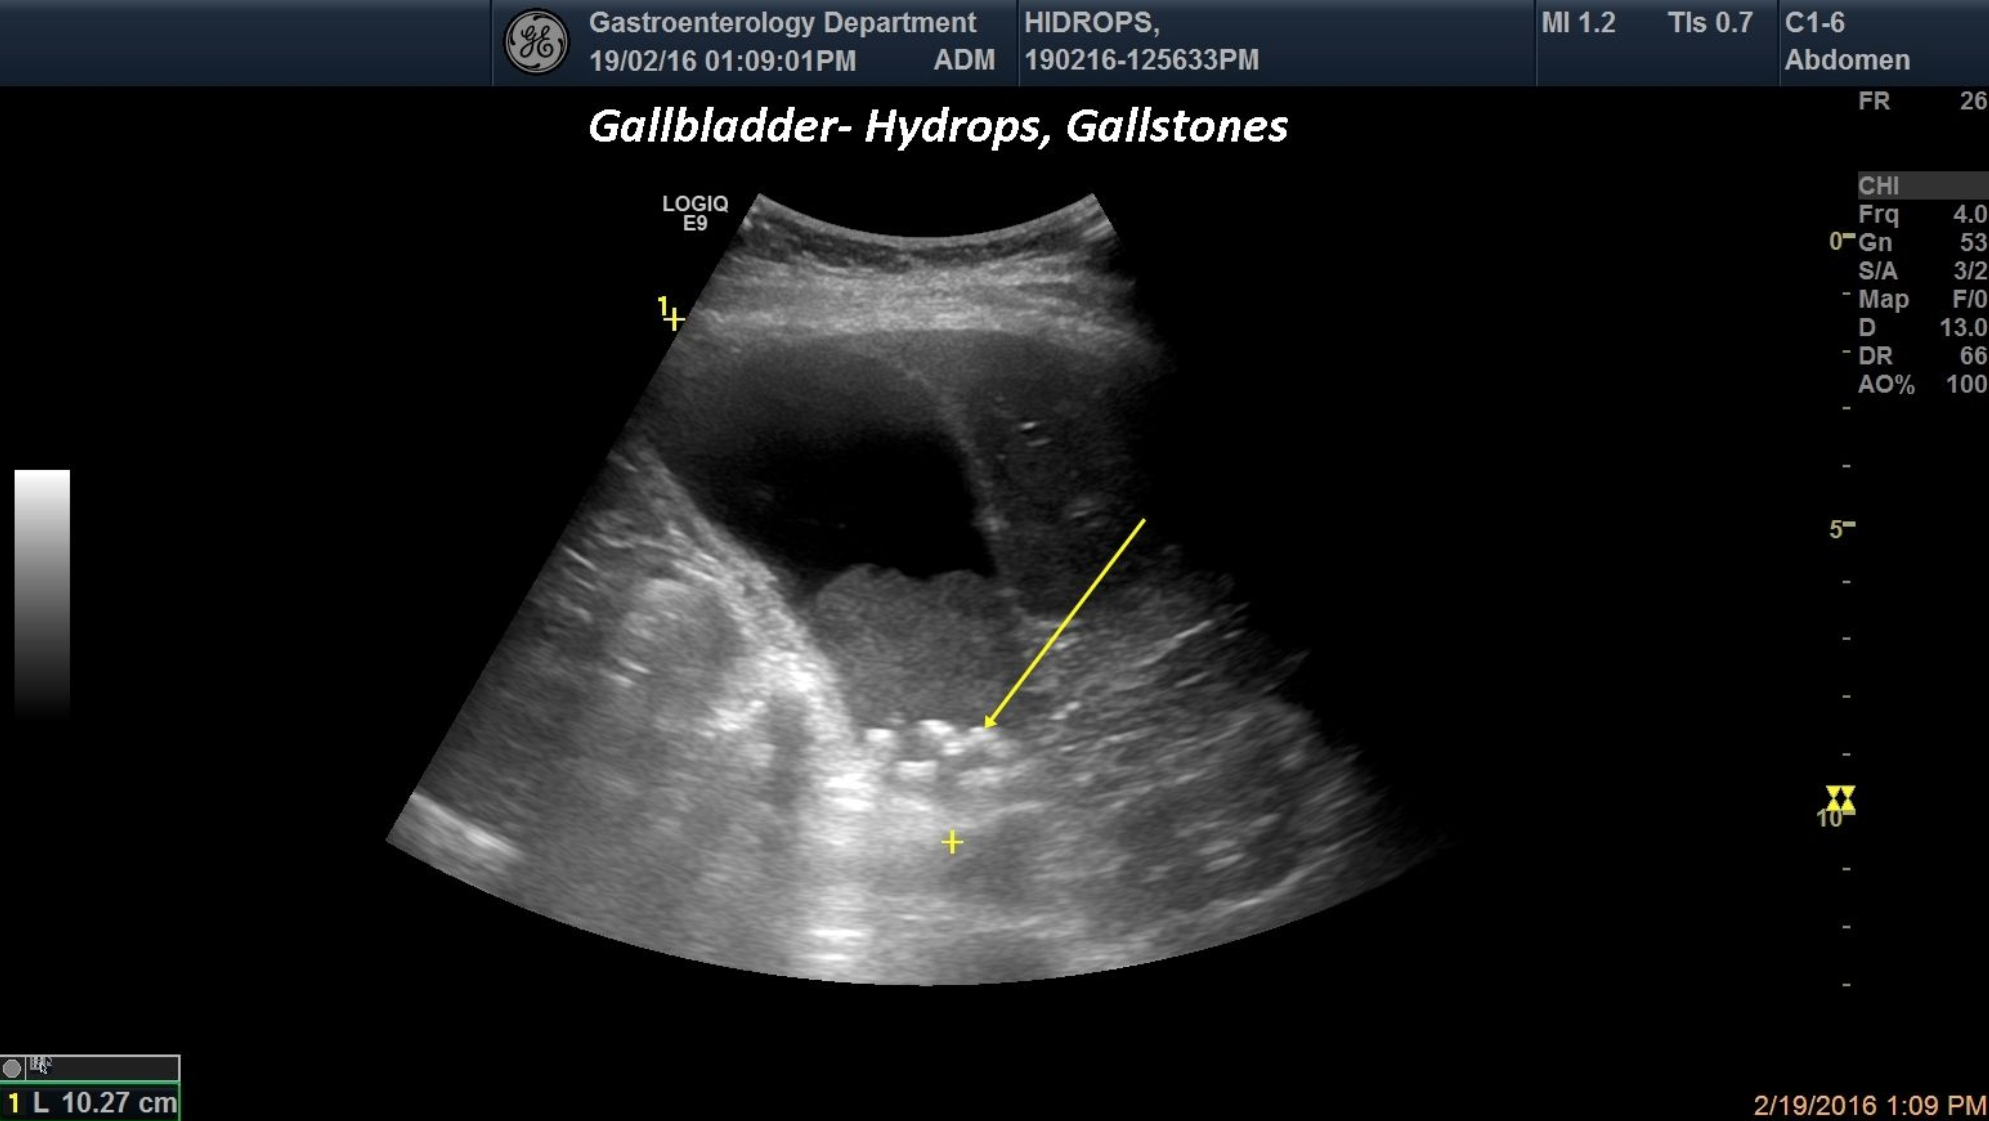 Gallbladder Hydrops, Gallstones and sludge [1 image]